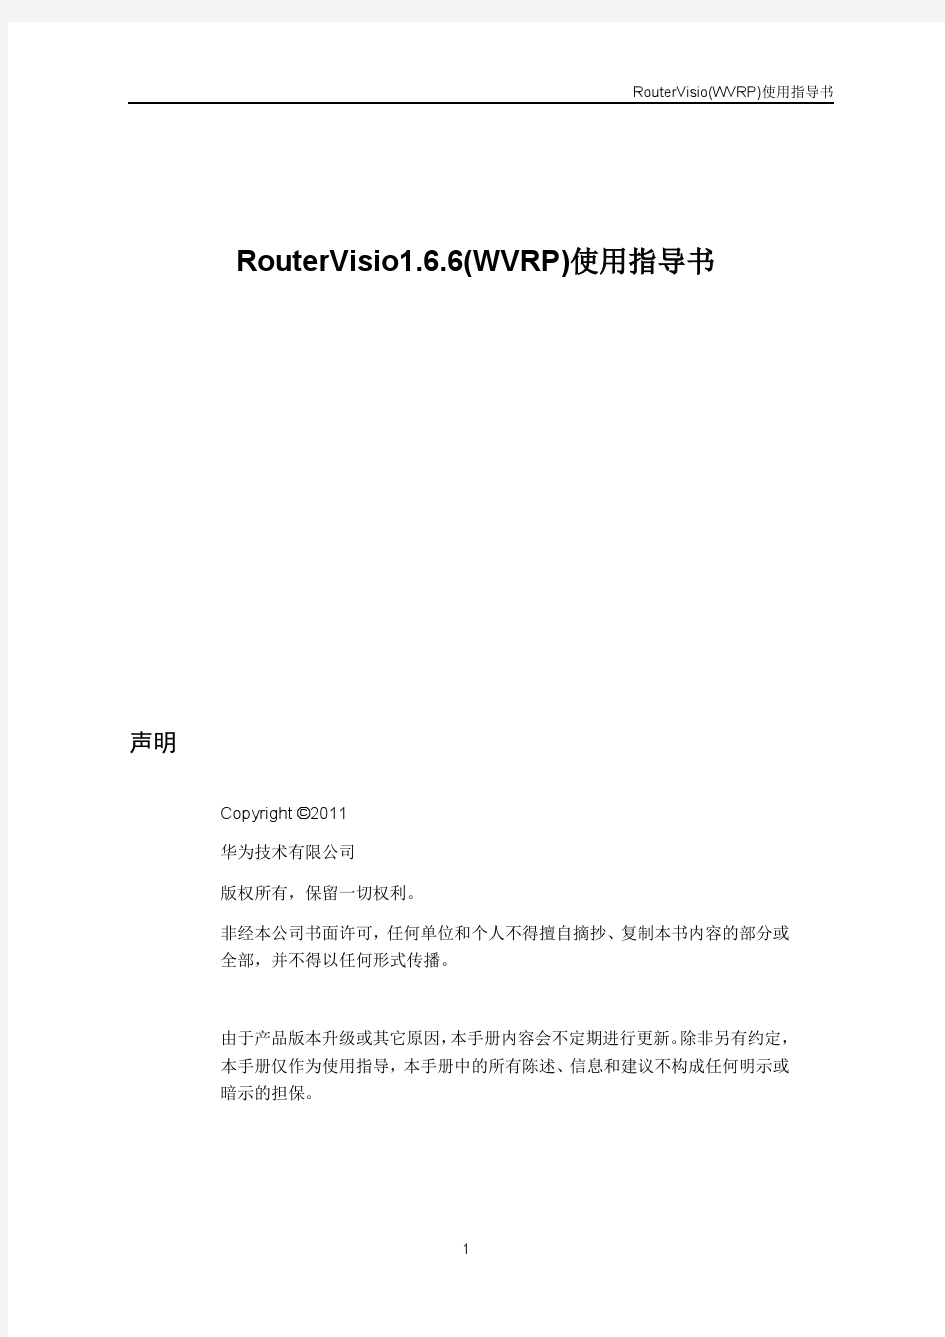 RouterVisio1.6.6(WVRP)使用指导书-20110312